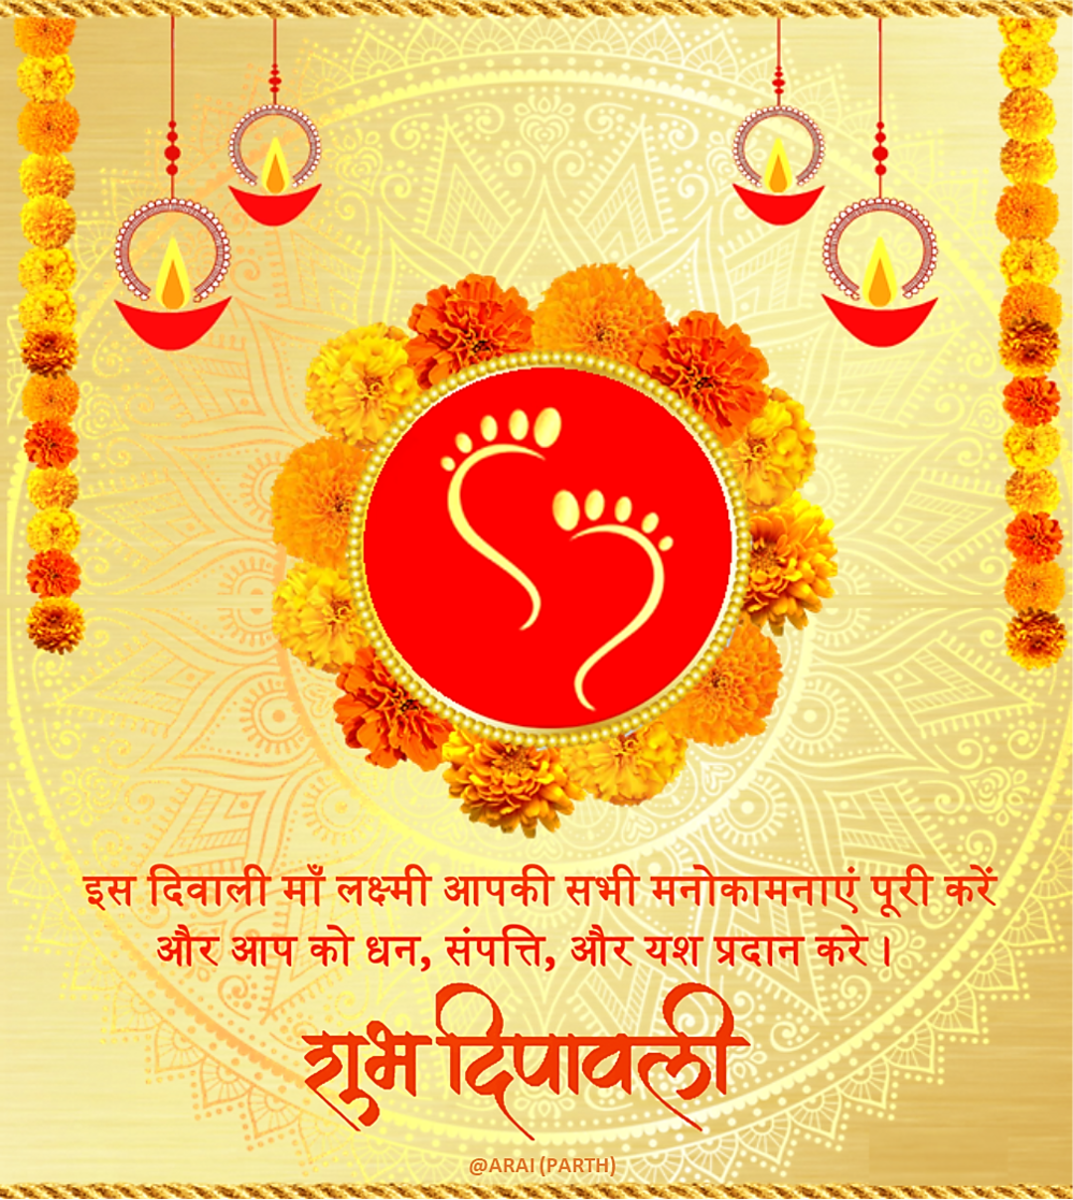 diwali-wishes-and-greetings-in-hindi-language